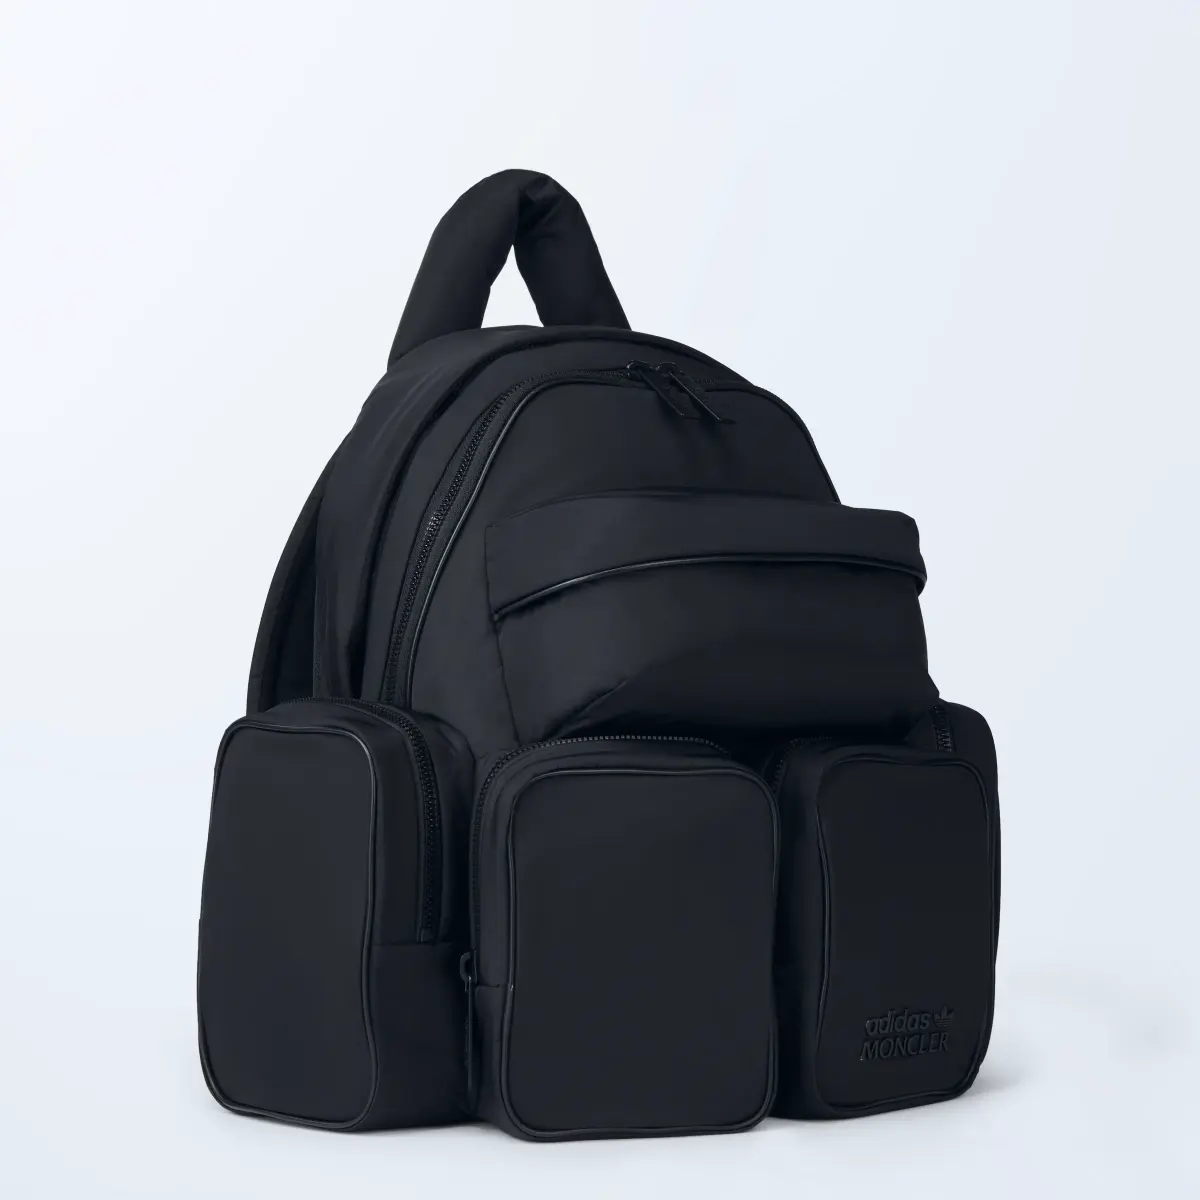 Adidas Moncler Backpack. 3